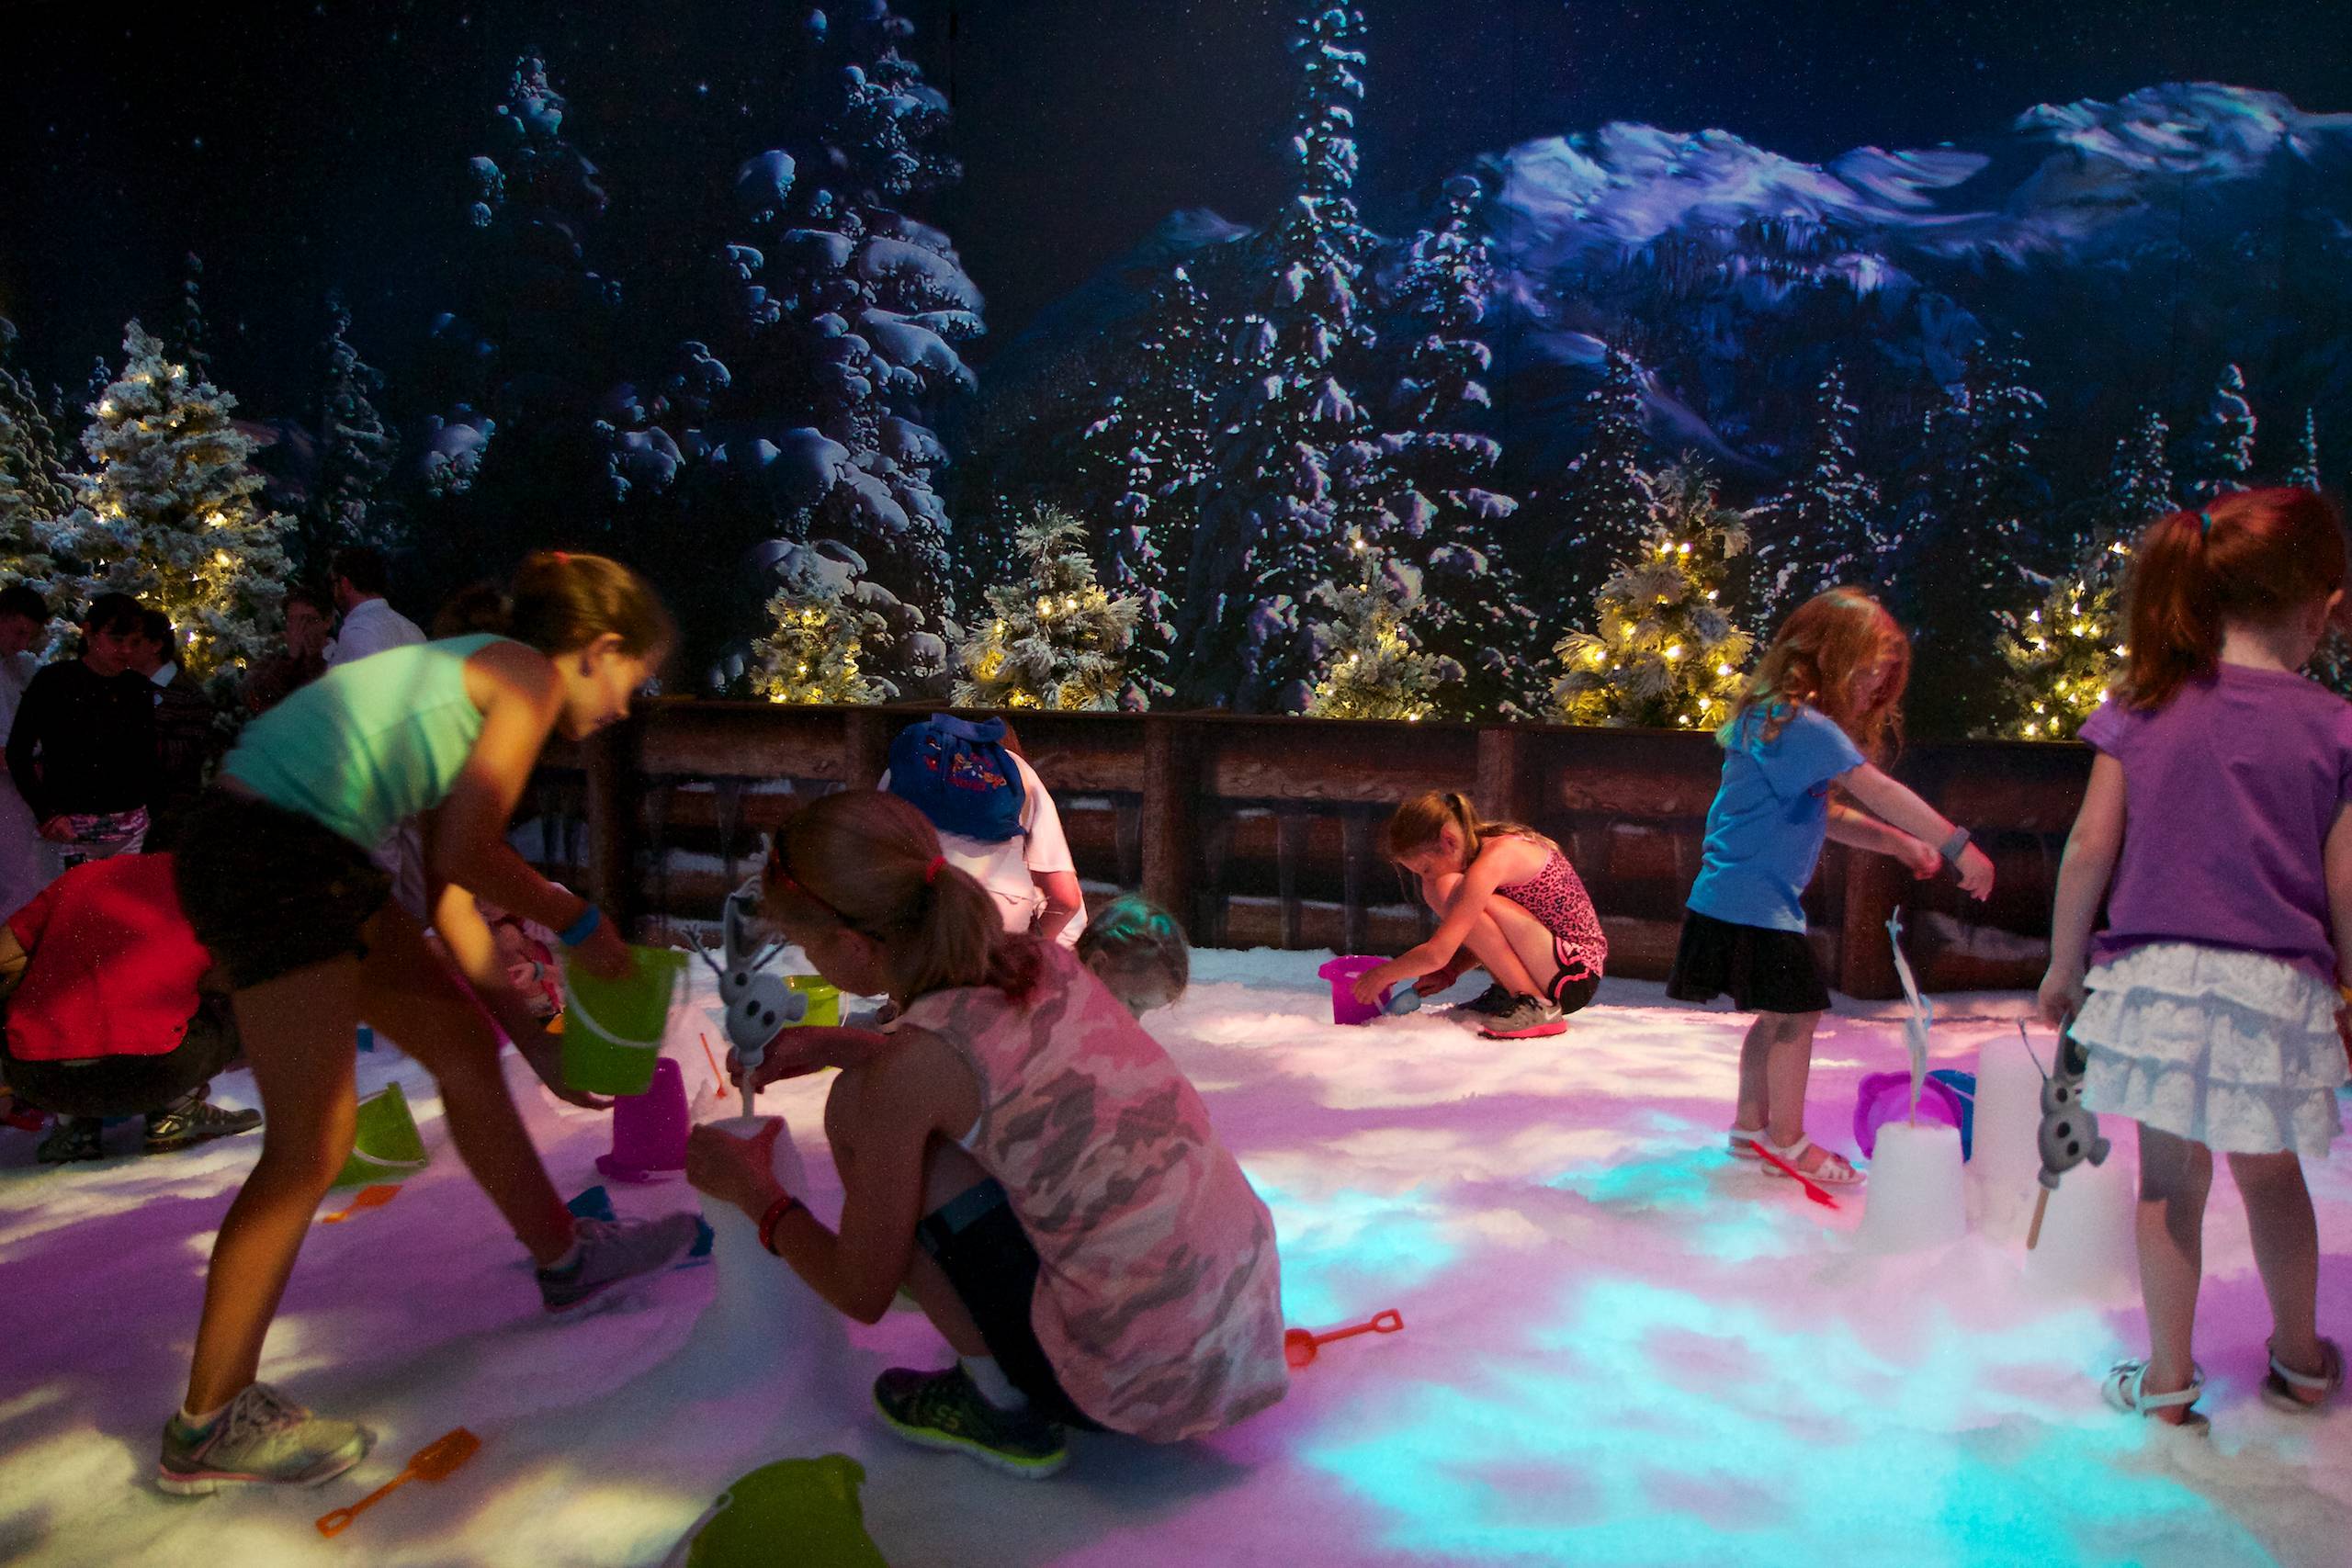 Frozen Summer Fun - Inside Wandering Oaken's Trading Post and Frozen Funland snow play area